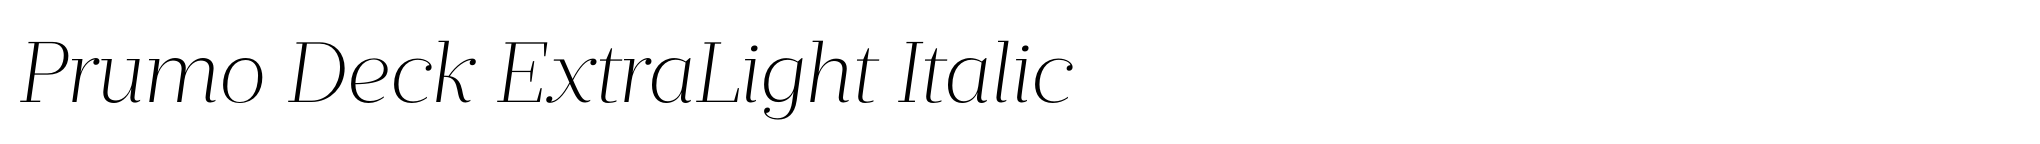 Prumo Deck ExtraLight Italic image